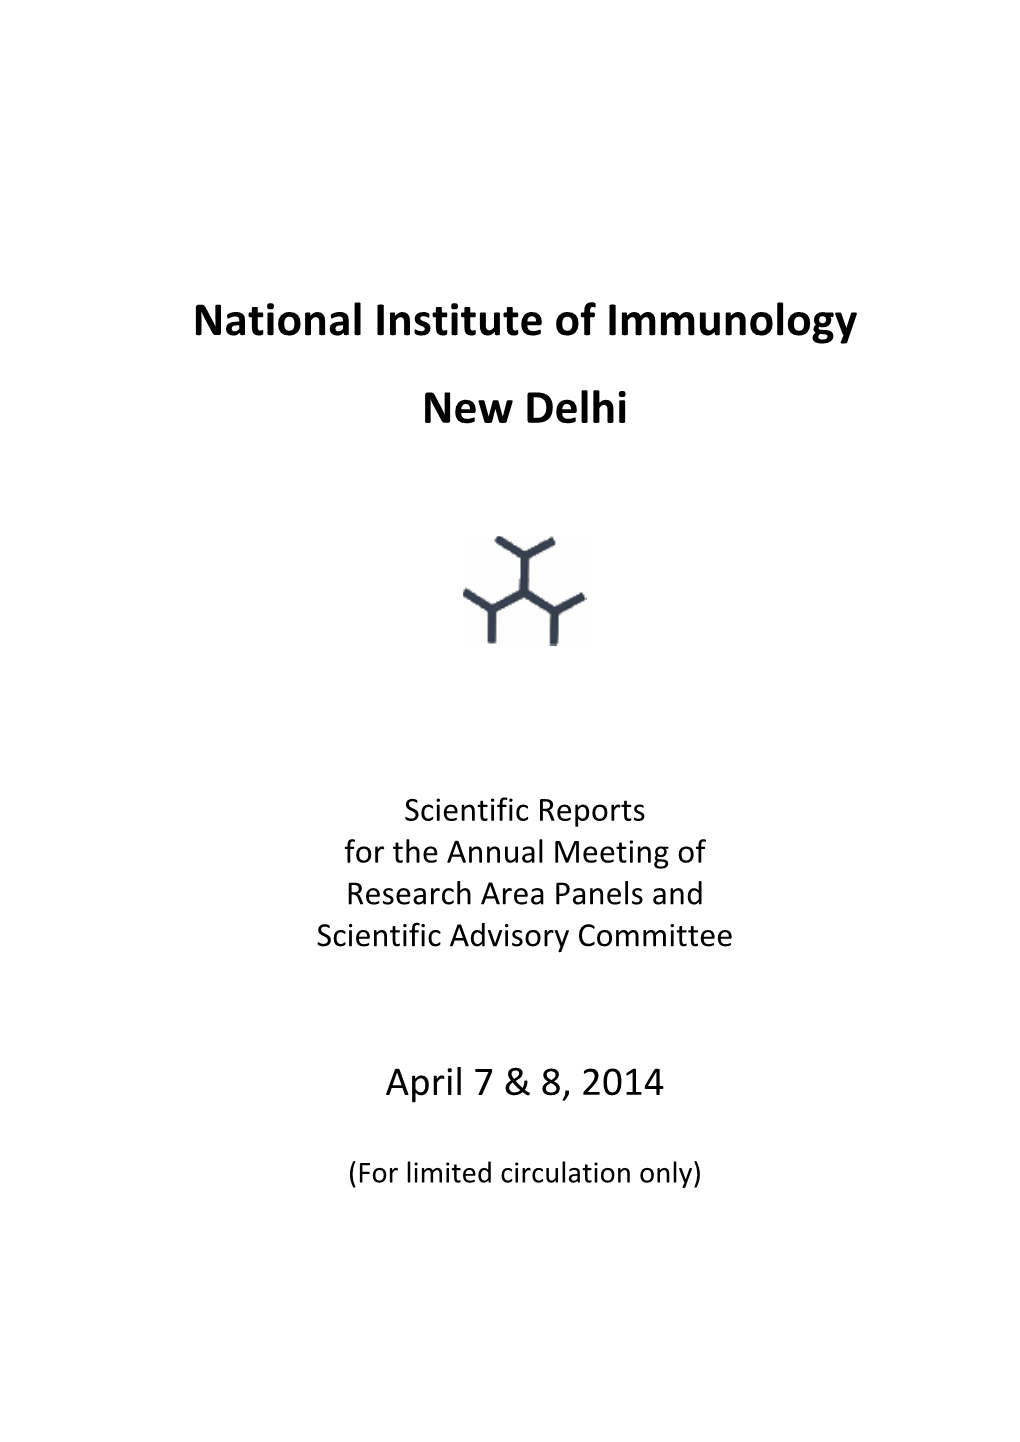 National Institute of Immunology New Delhi